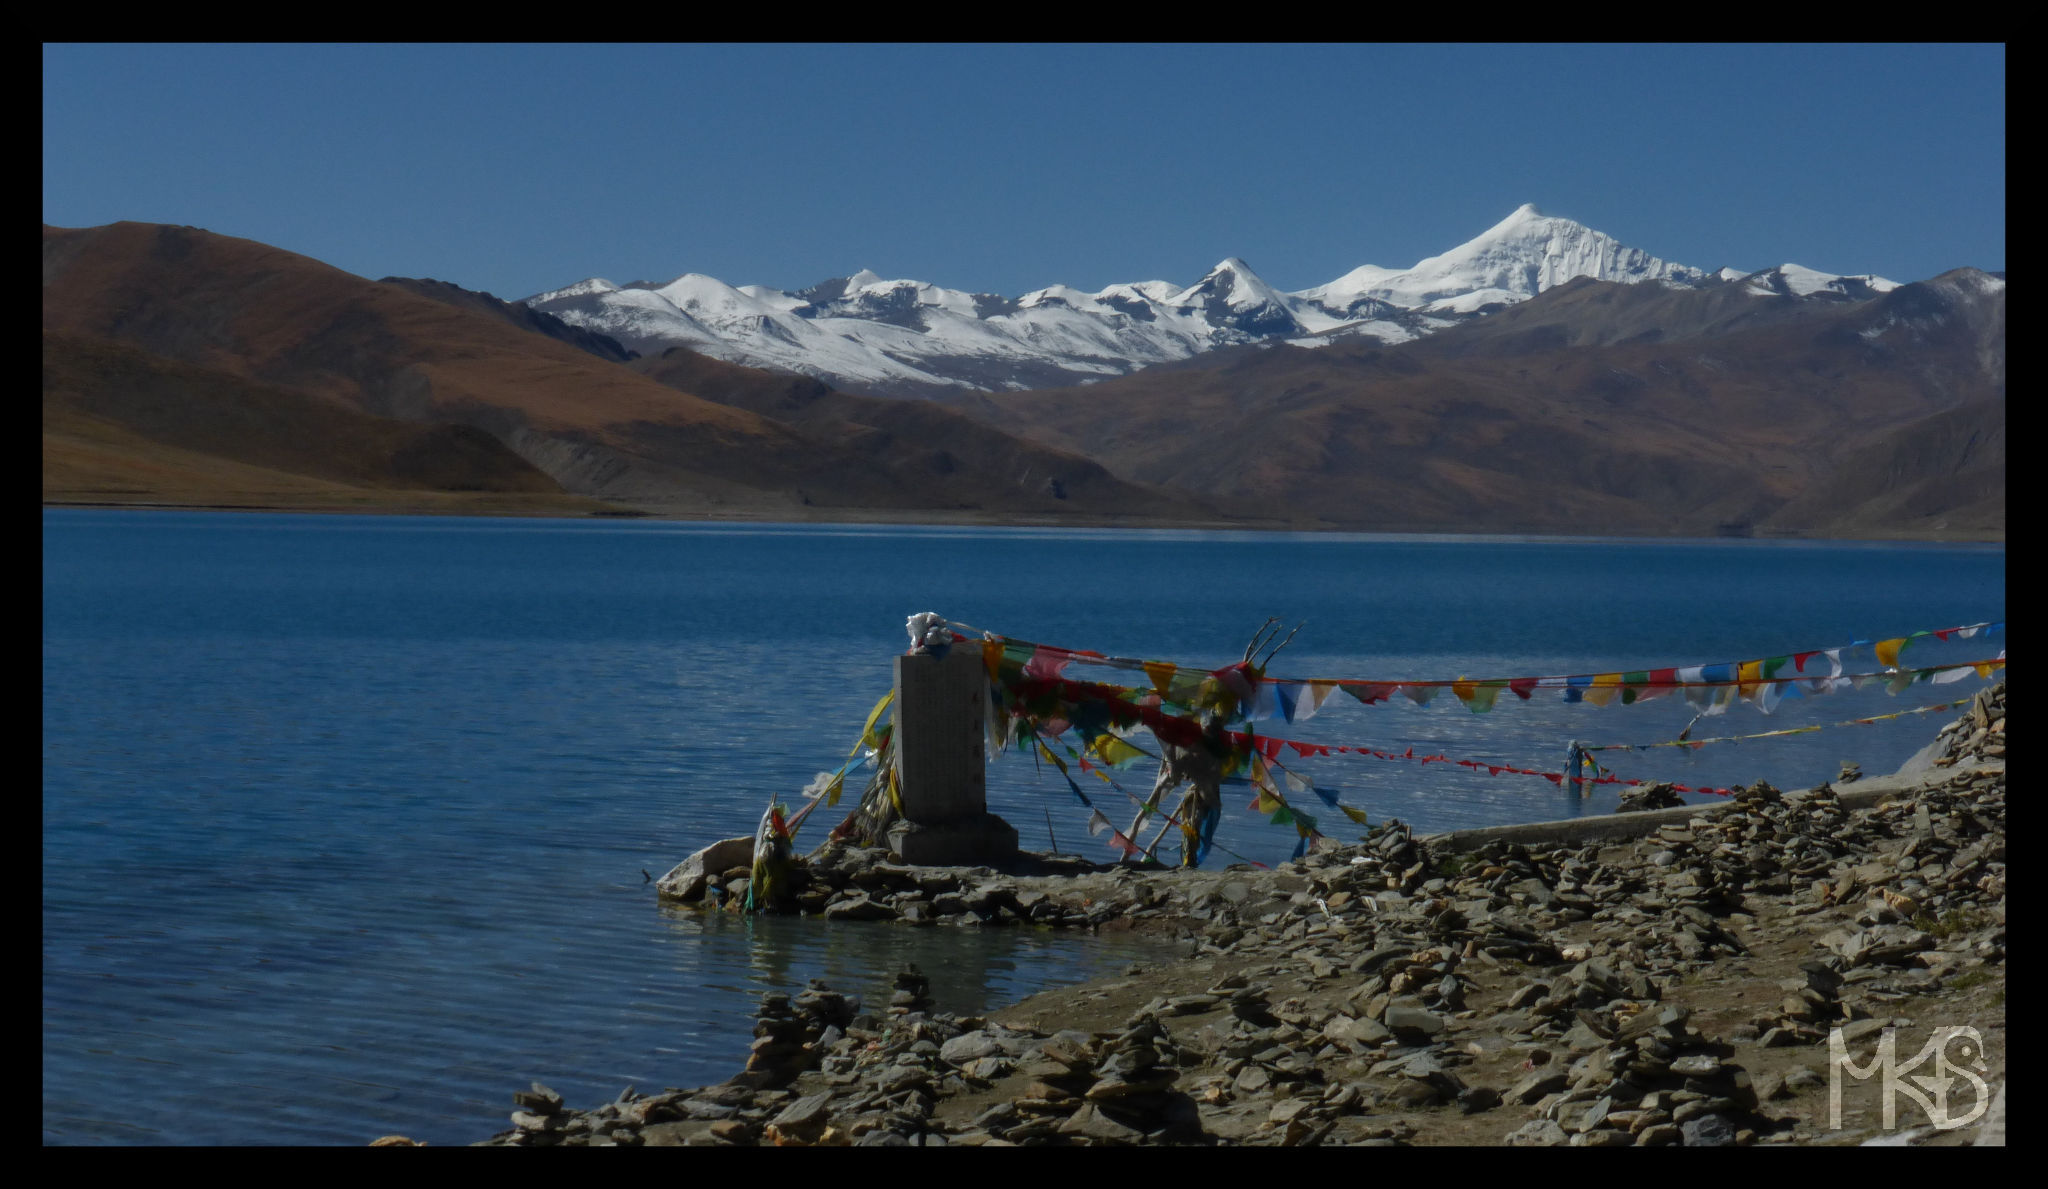 Prayer flags and mountains, Tibet